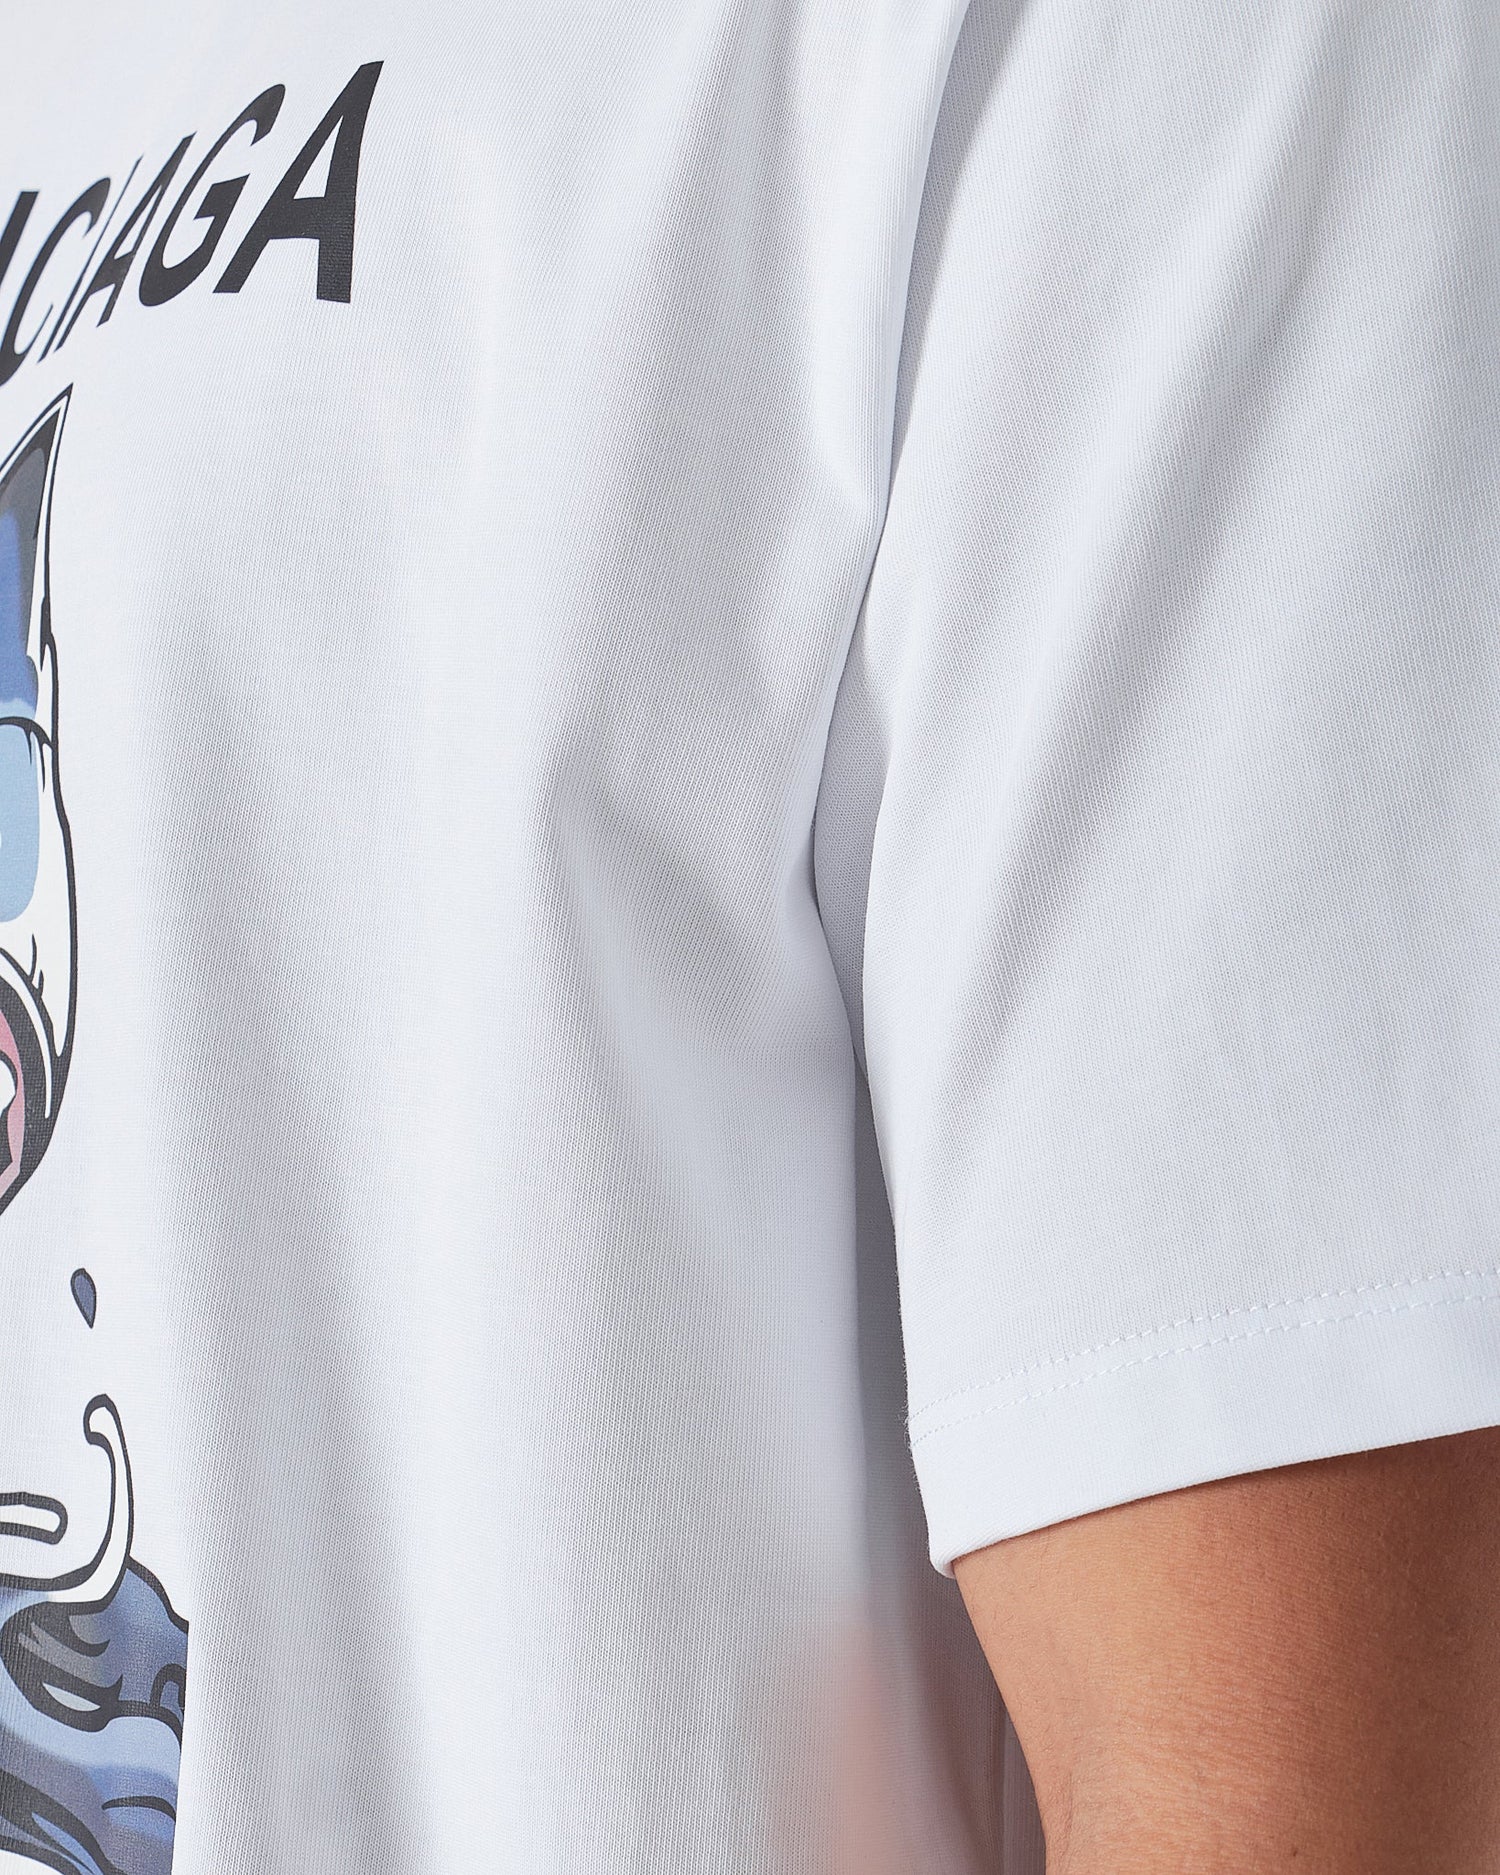 MOI OUTFIT-BAL Sharks Men White T-Shirt 22.90